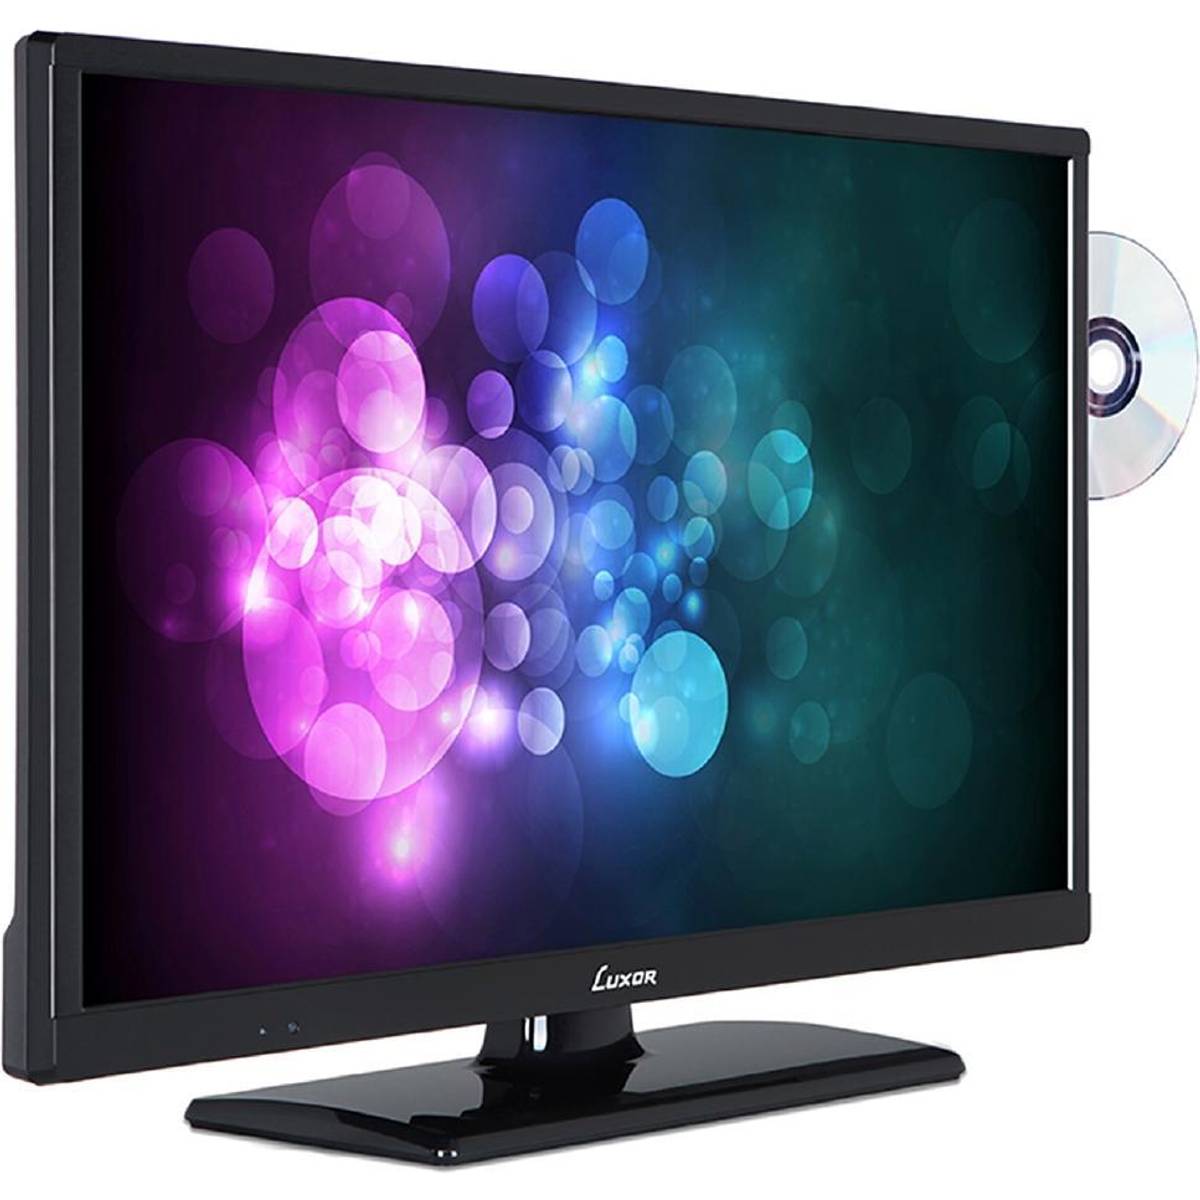 Luxor TV (5 produkter) hos PriceRunner • Se lägsta pris nu »